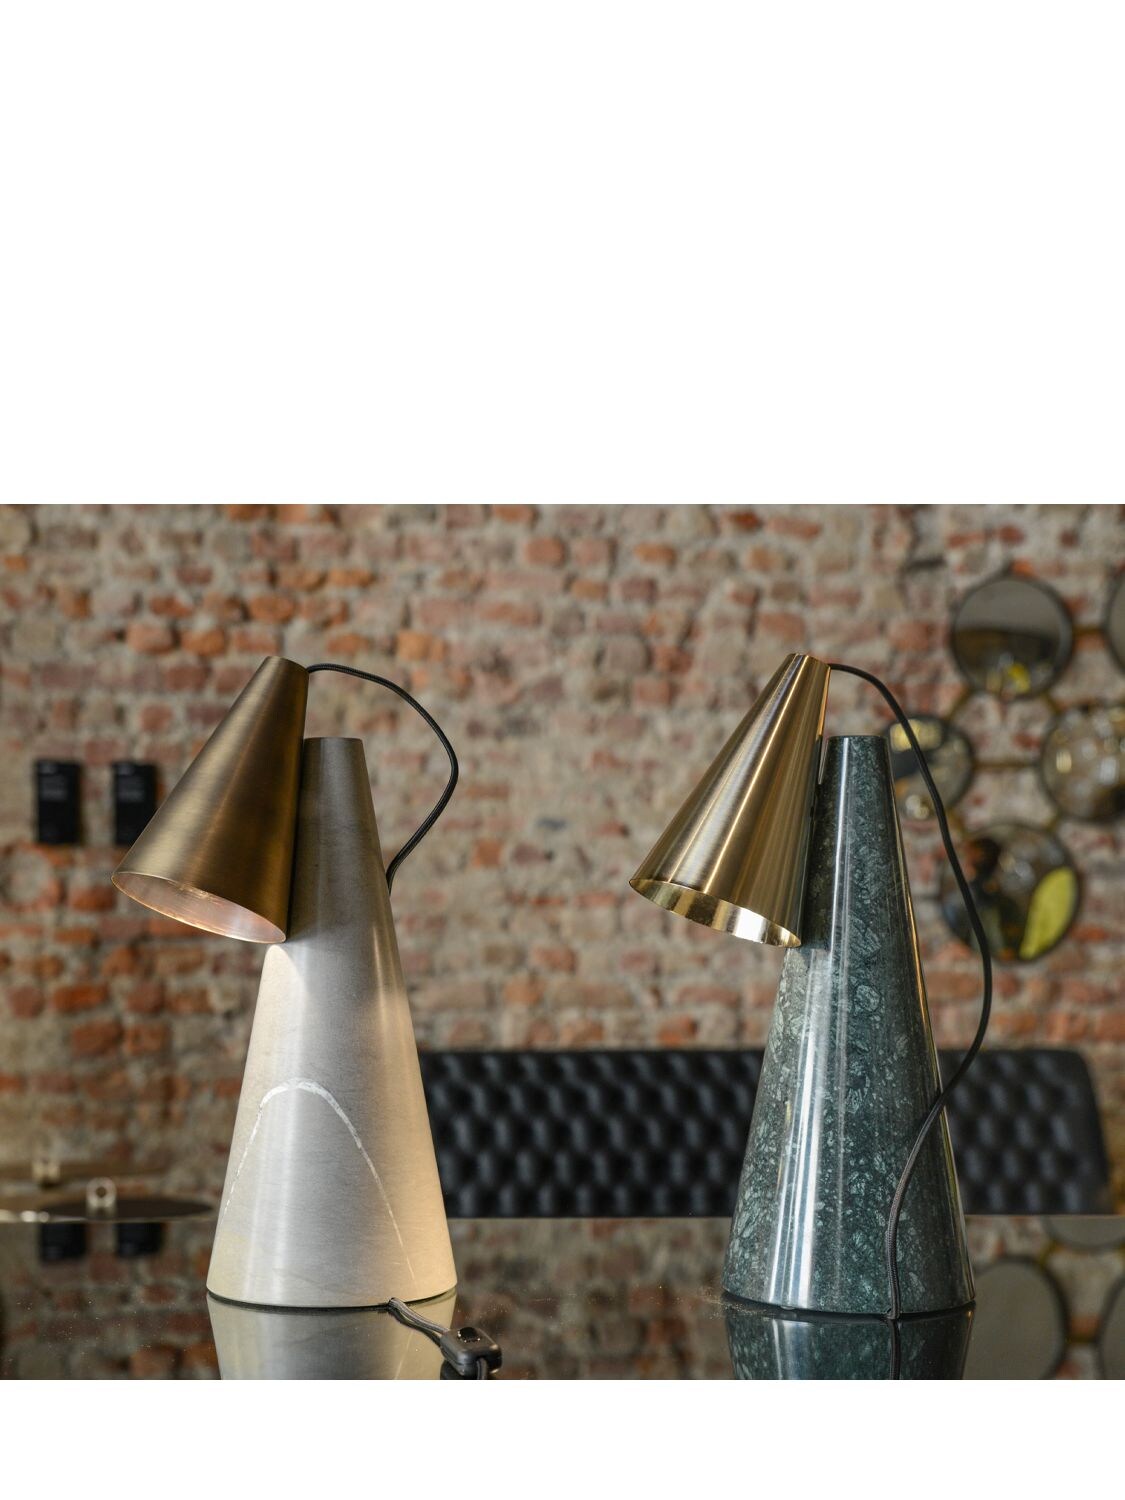 Shop Edizioni Ed038 Table Lamp In Green